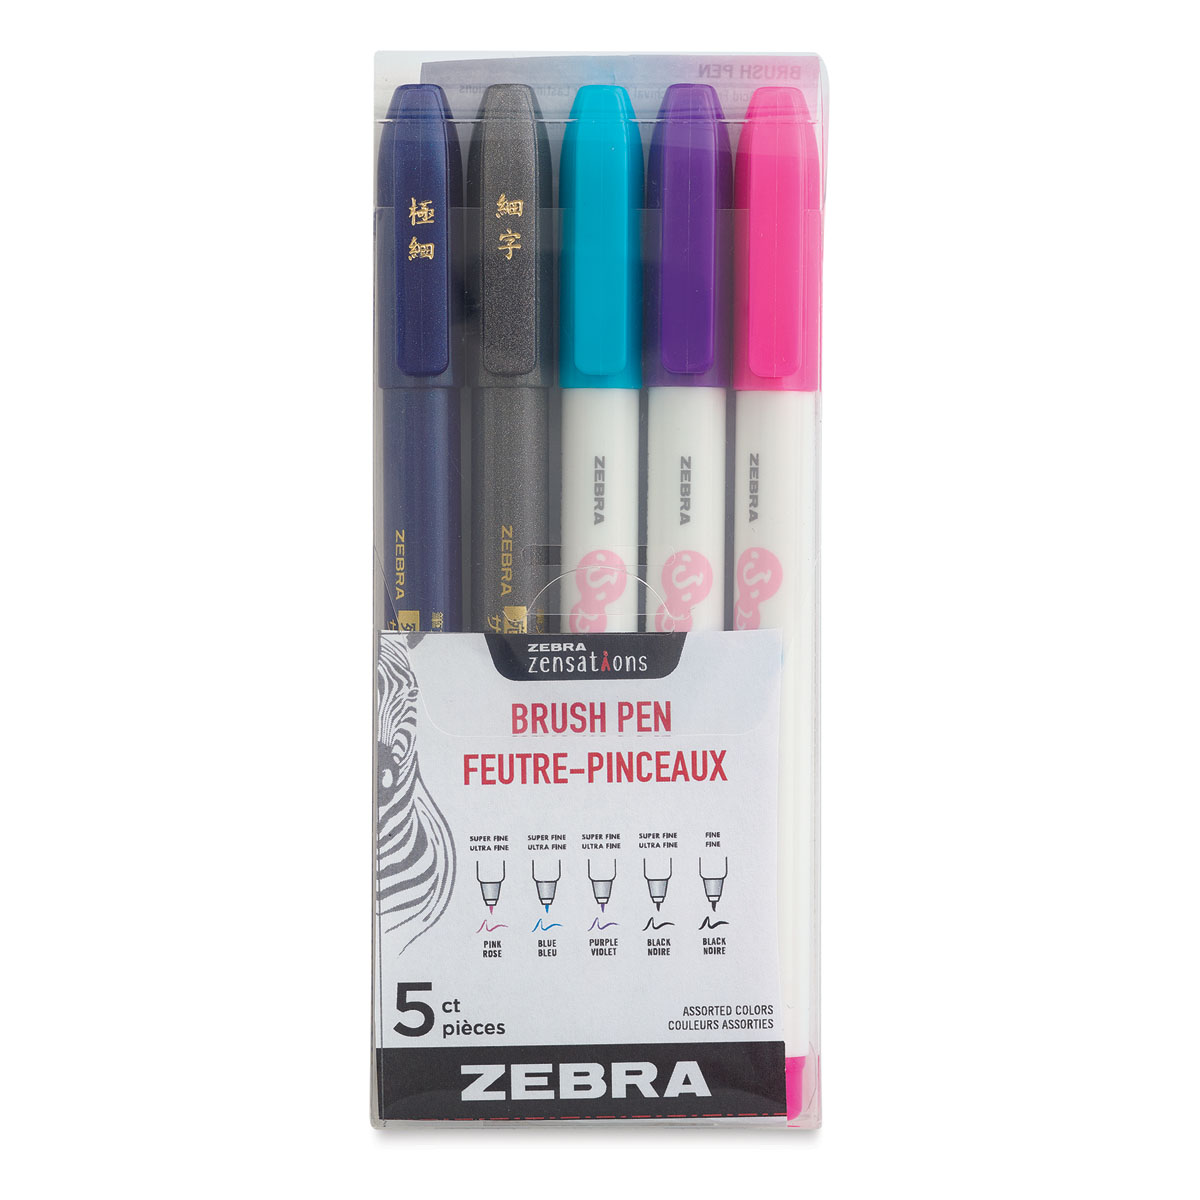 Zebra Zensations Fountain Pen - Black - 0.6 mm